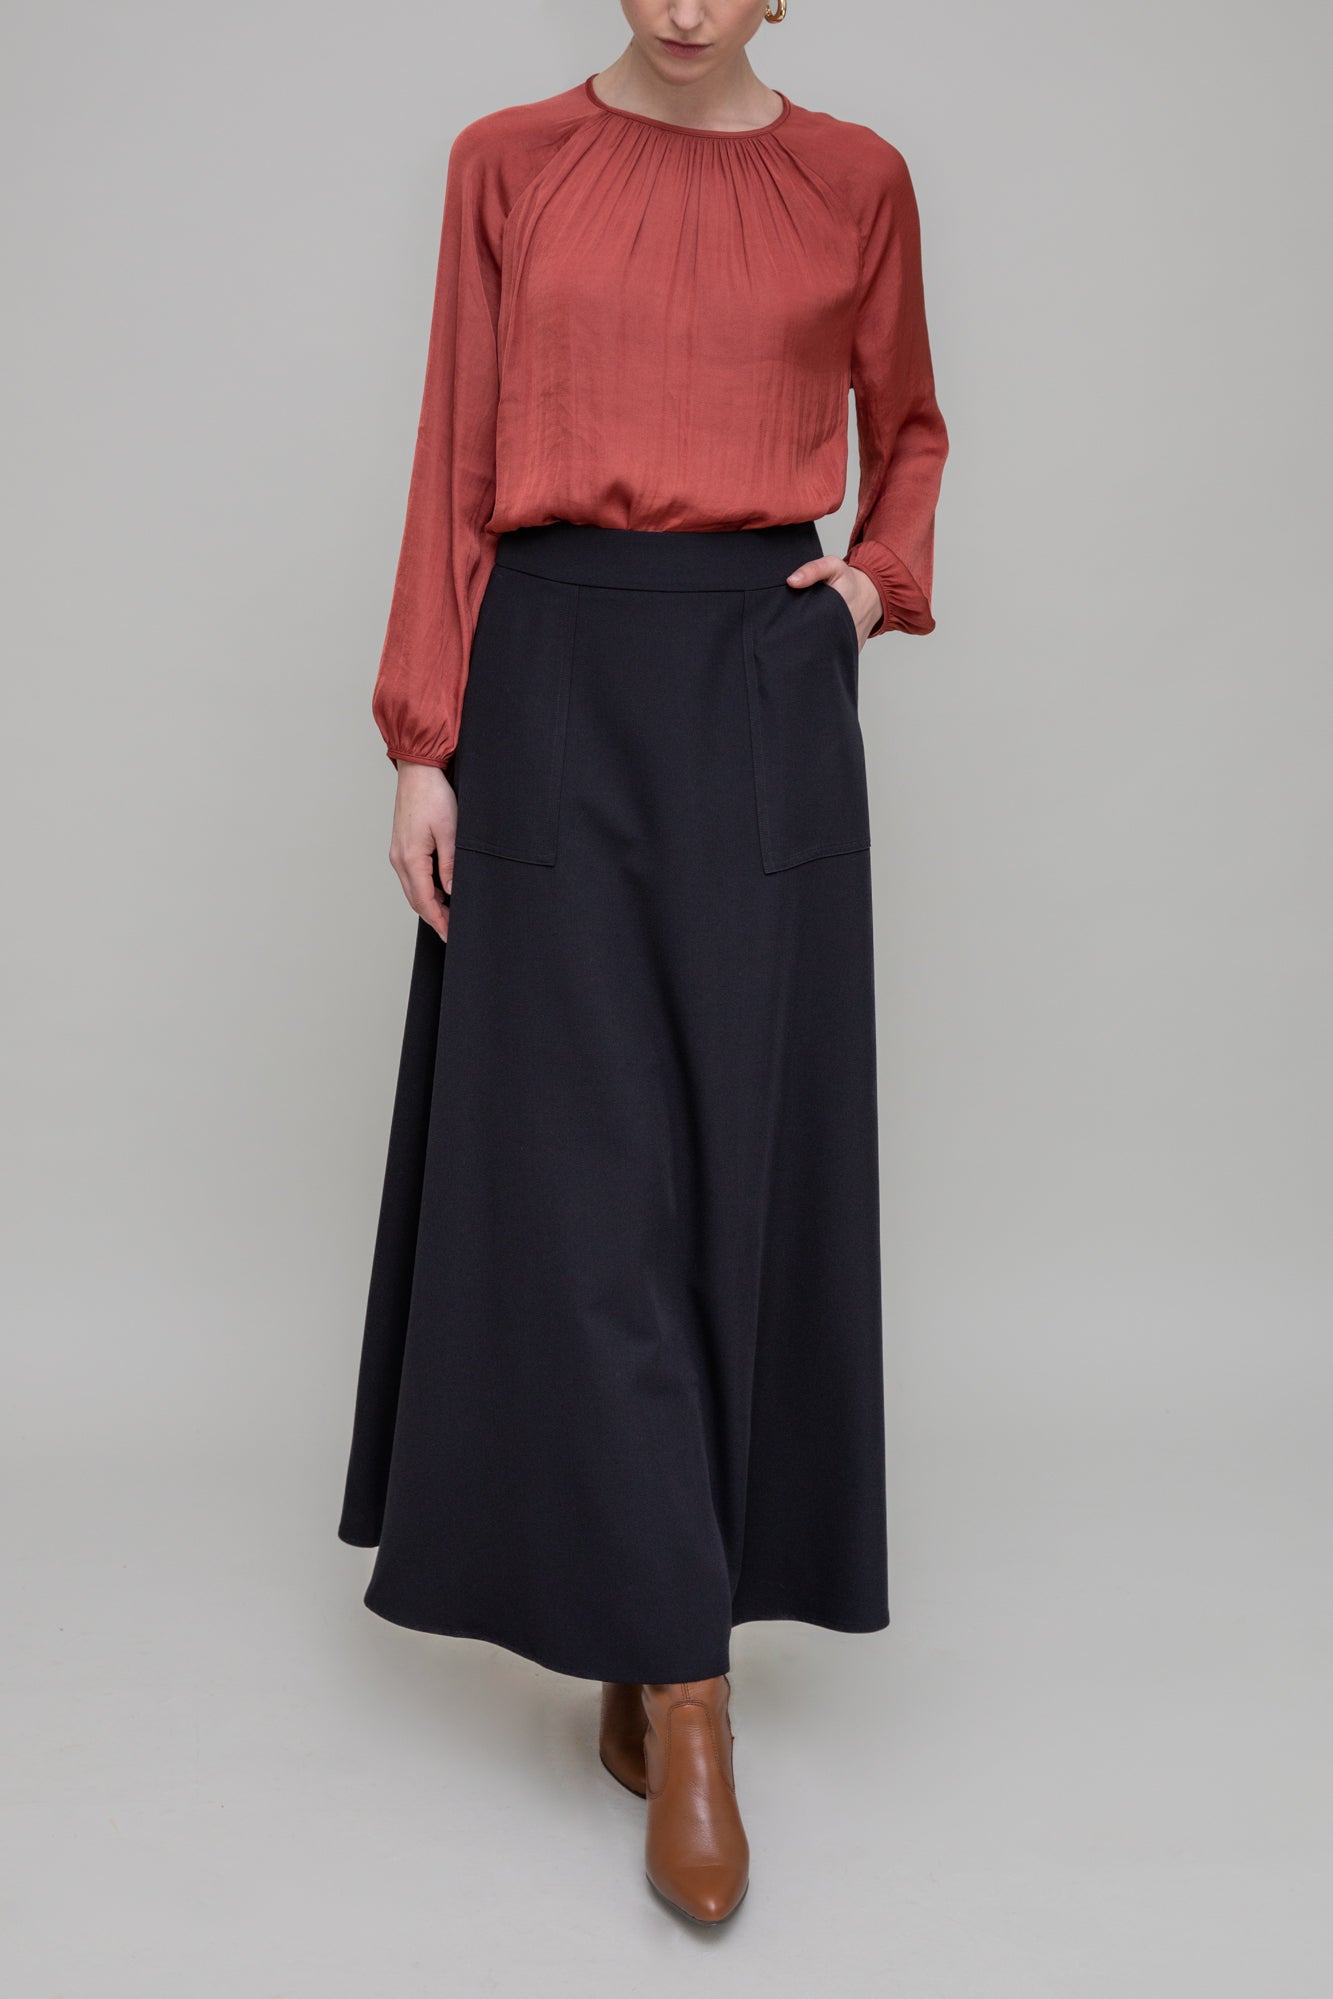 Black Leather Mini Skirt - Quilted Print - Esha - Preby London